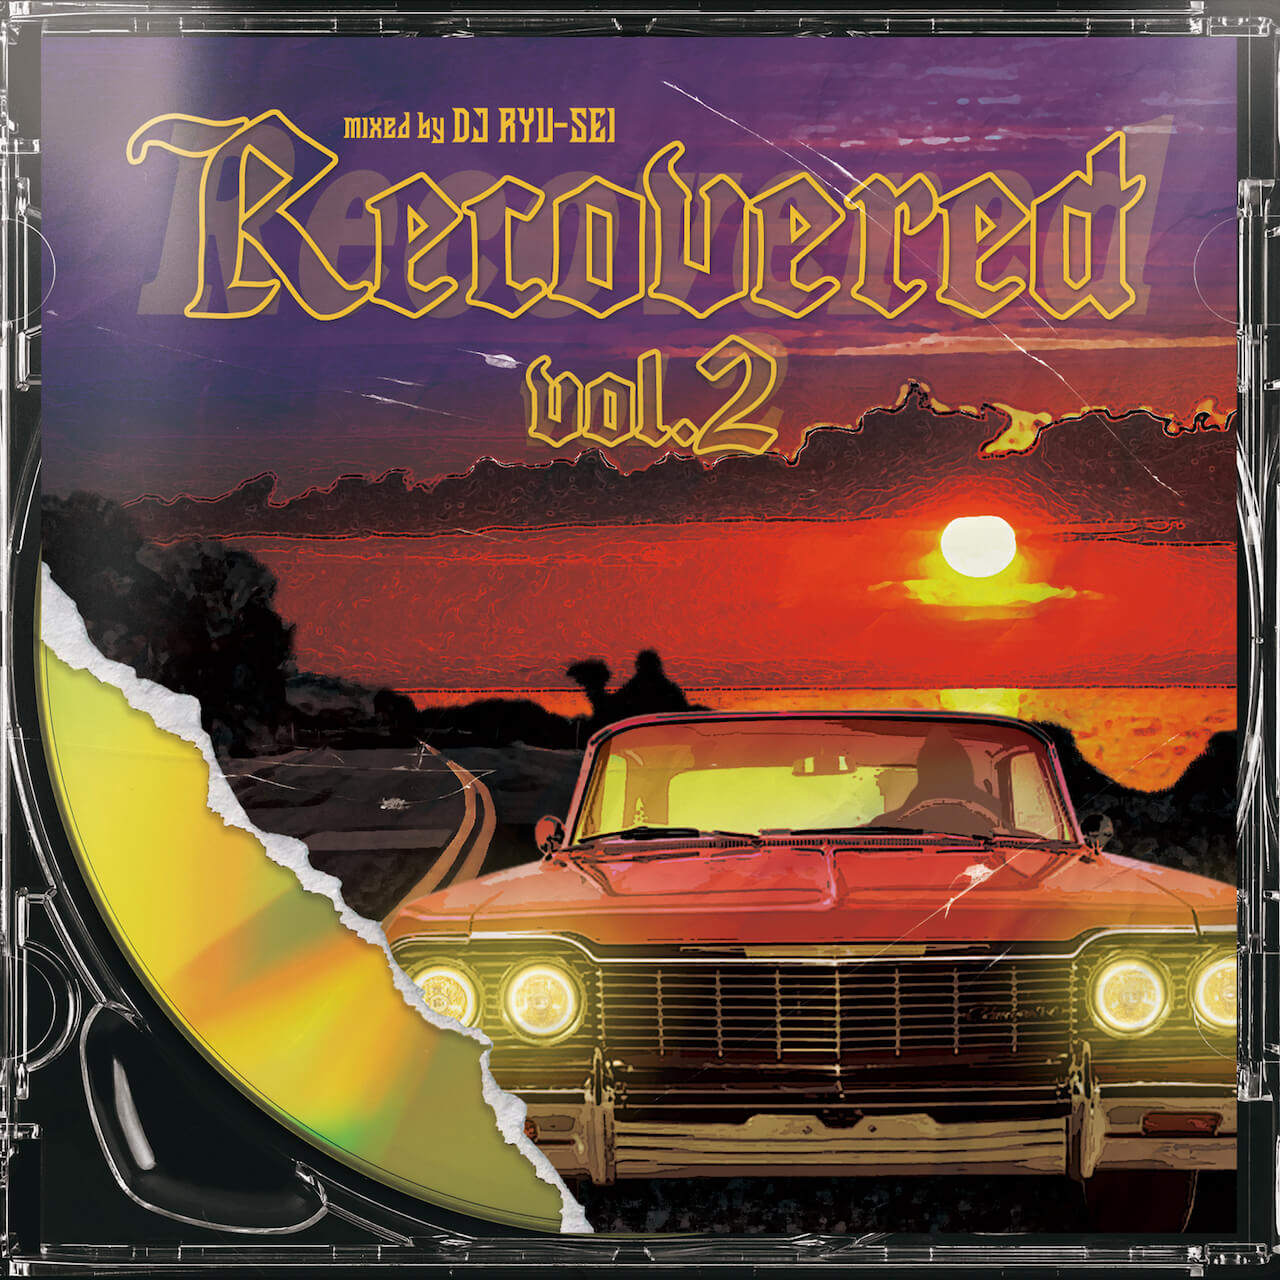 〈DLiP RECORDS〉より、DJ RYU-SEIがMIX CD『Recovered vol.2』をリリース music211104-djryusei-2